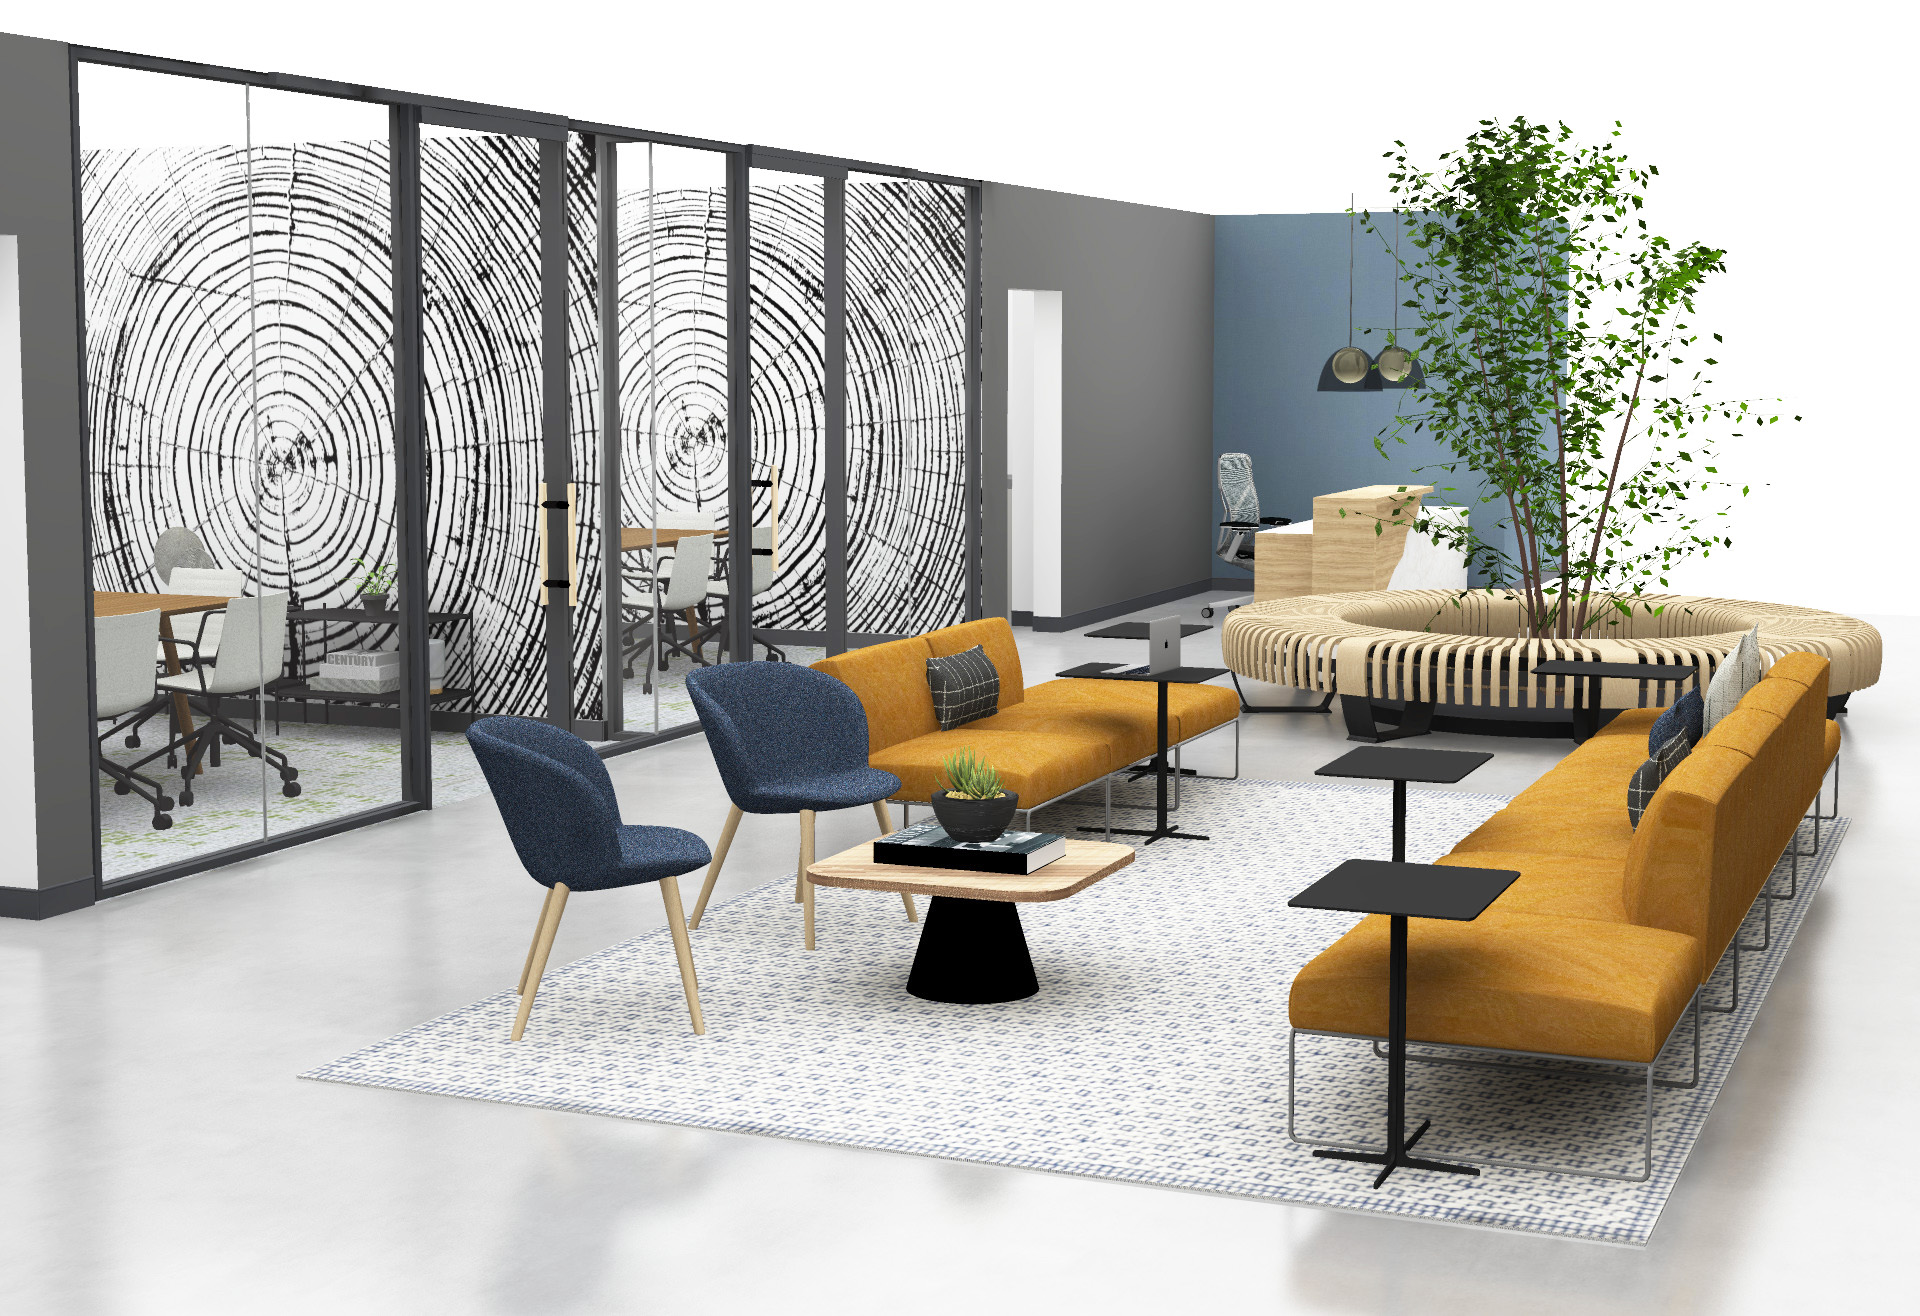 96-2019perkins-willfront-work-lounge.jpg